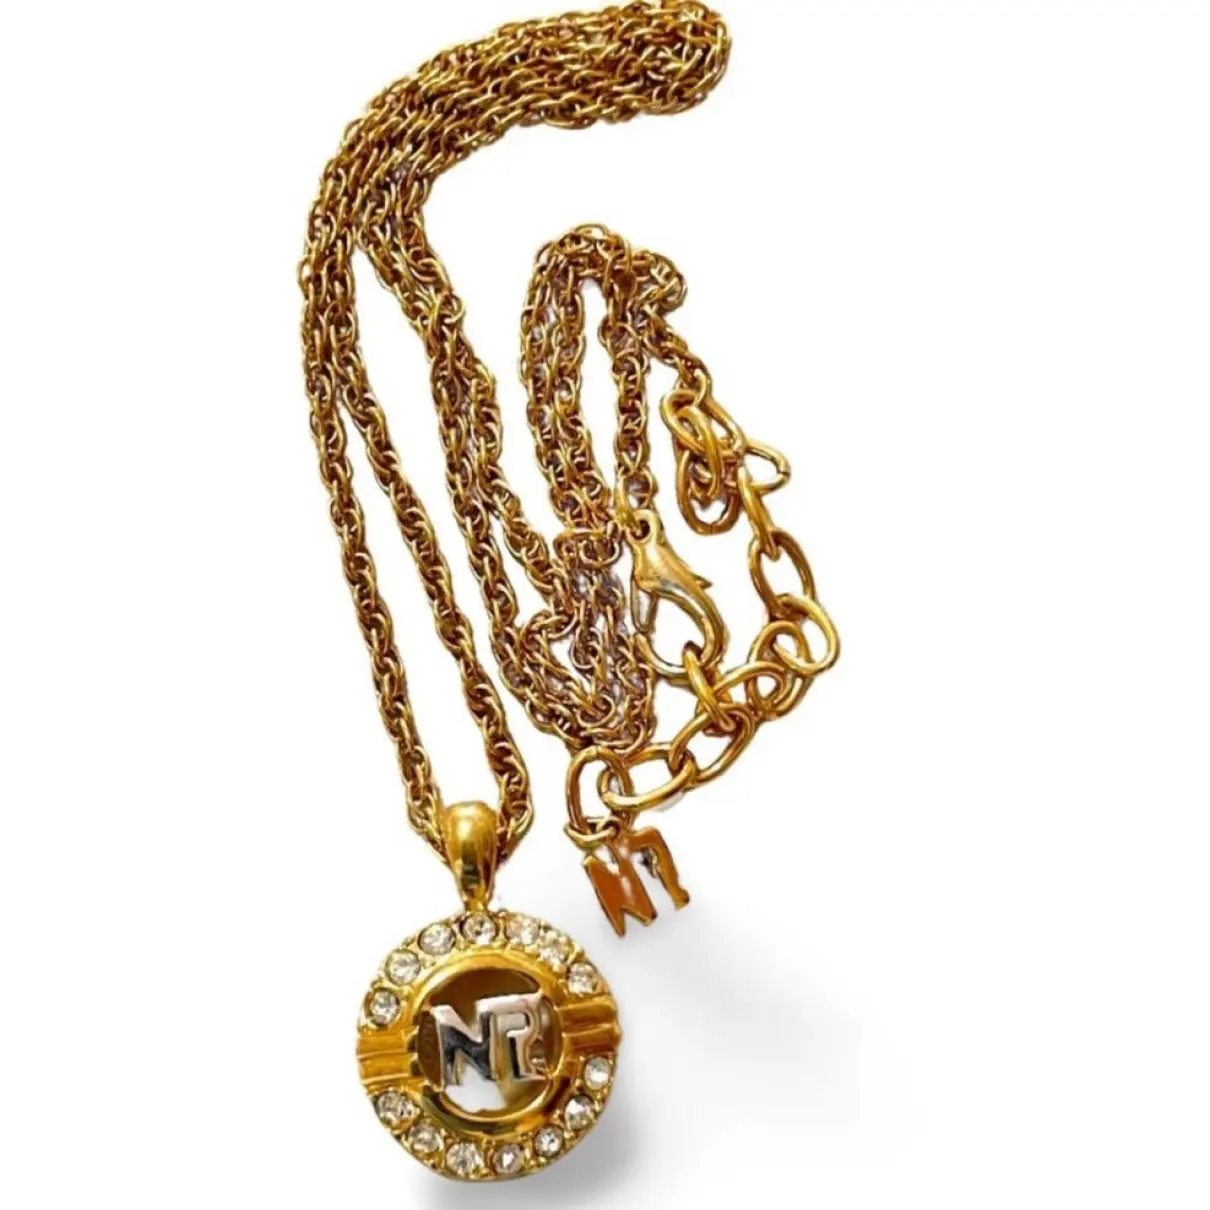 Buy Nina Ricci Necklace online